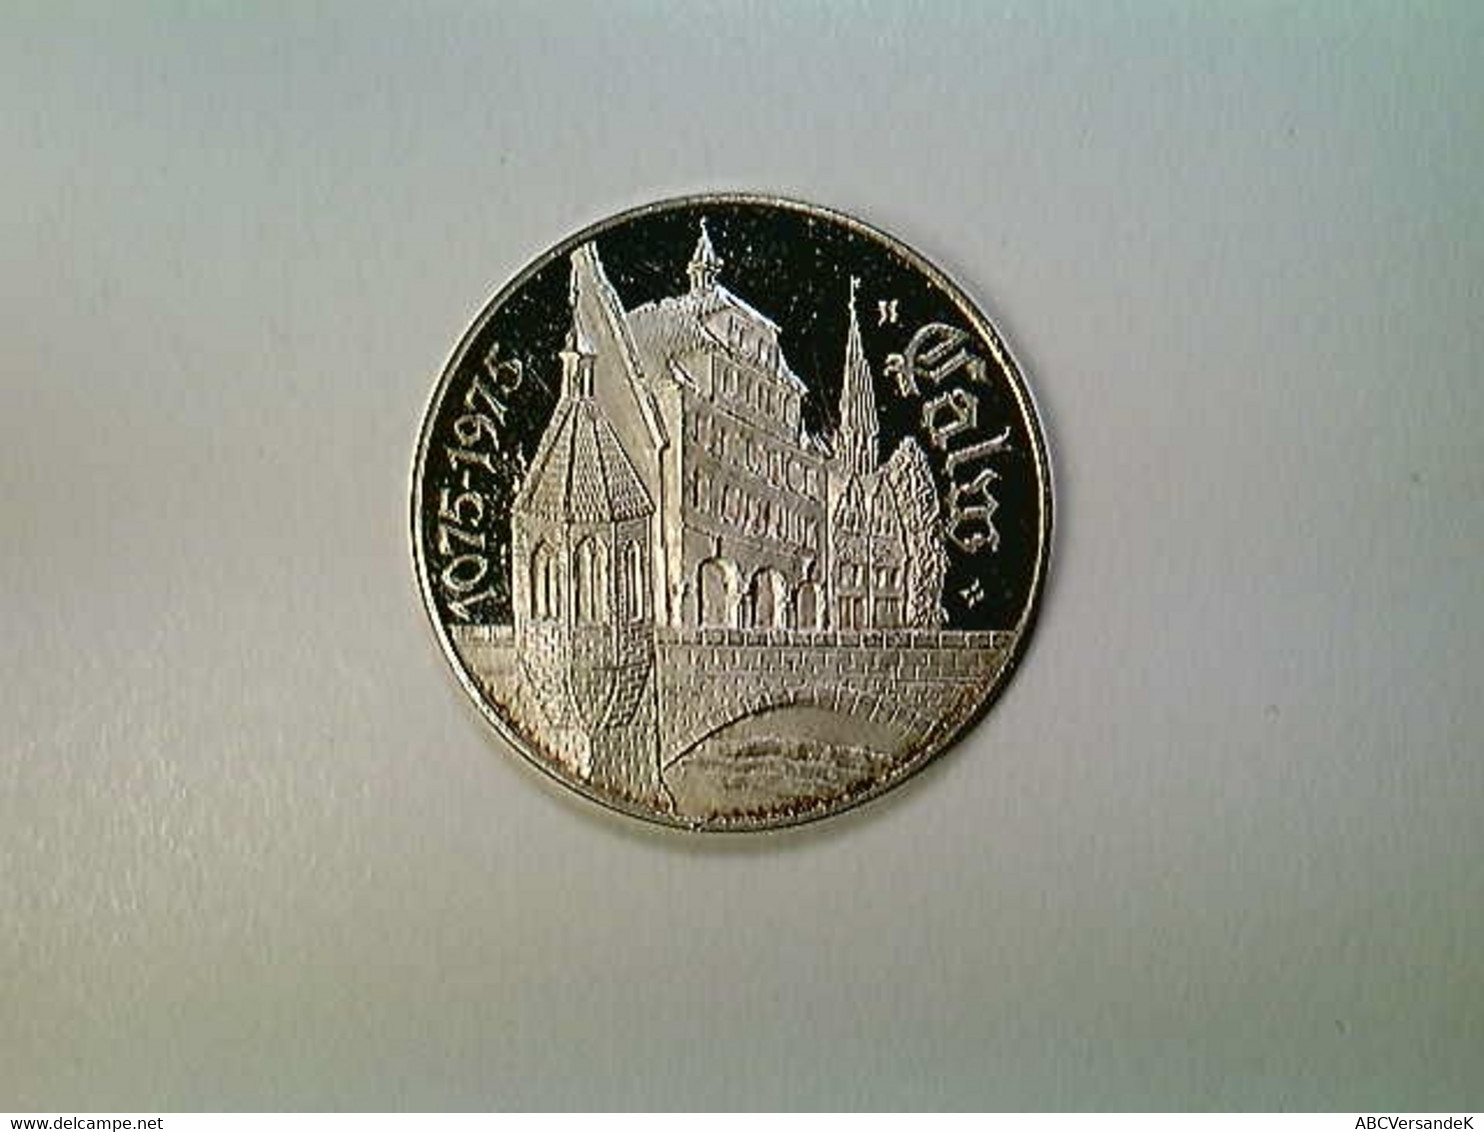 Medaille Calw, 900 Jahre 1075-1975, Silber 999 - Numismatics